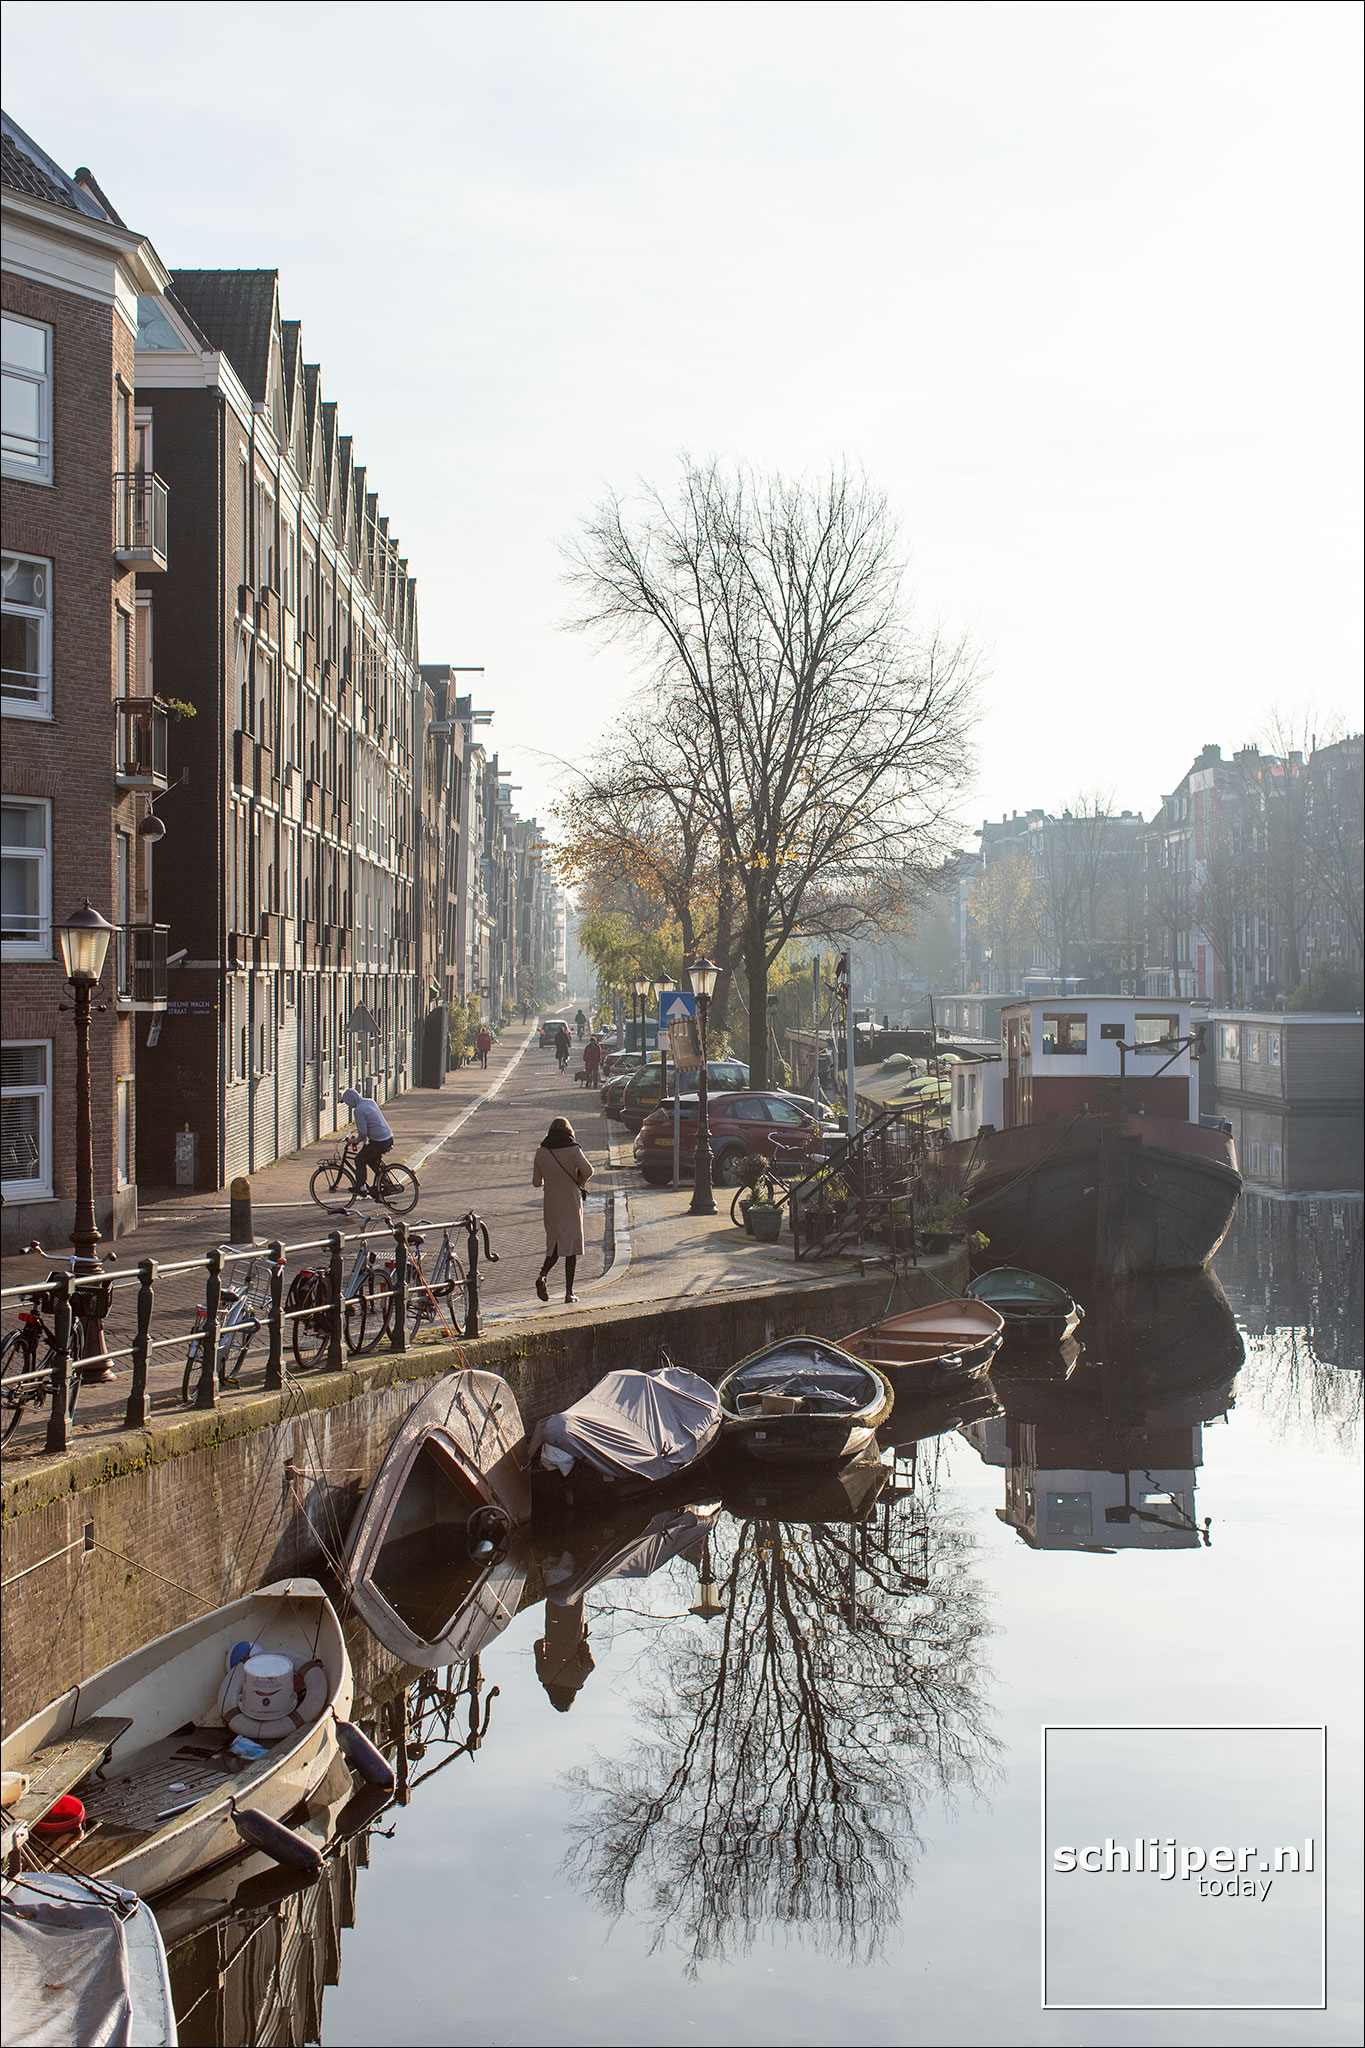 The Netherlands, Amsterdam, 24 november 2019